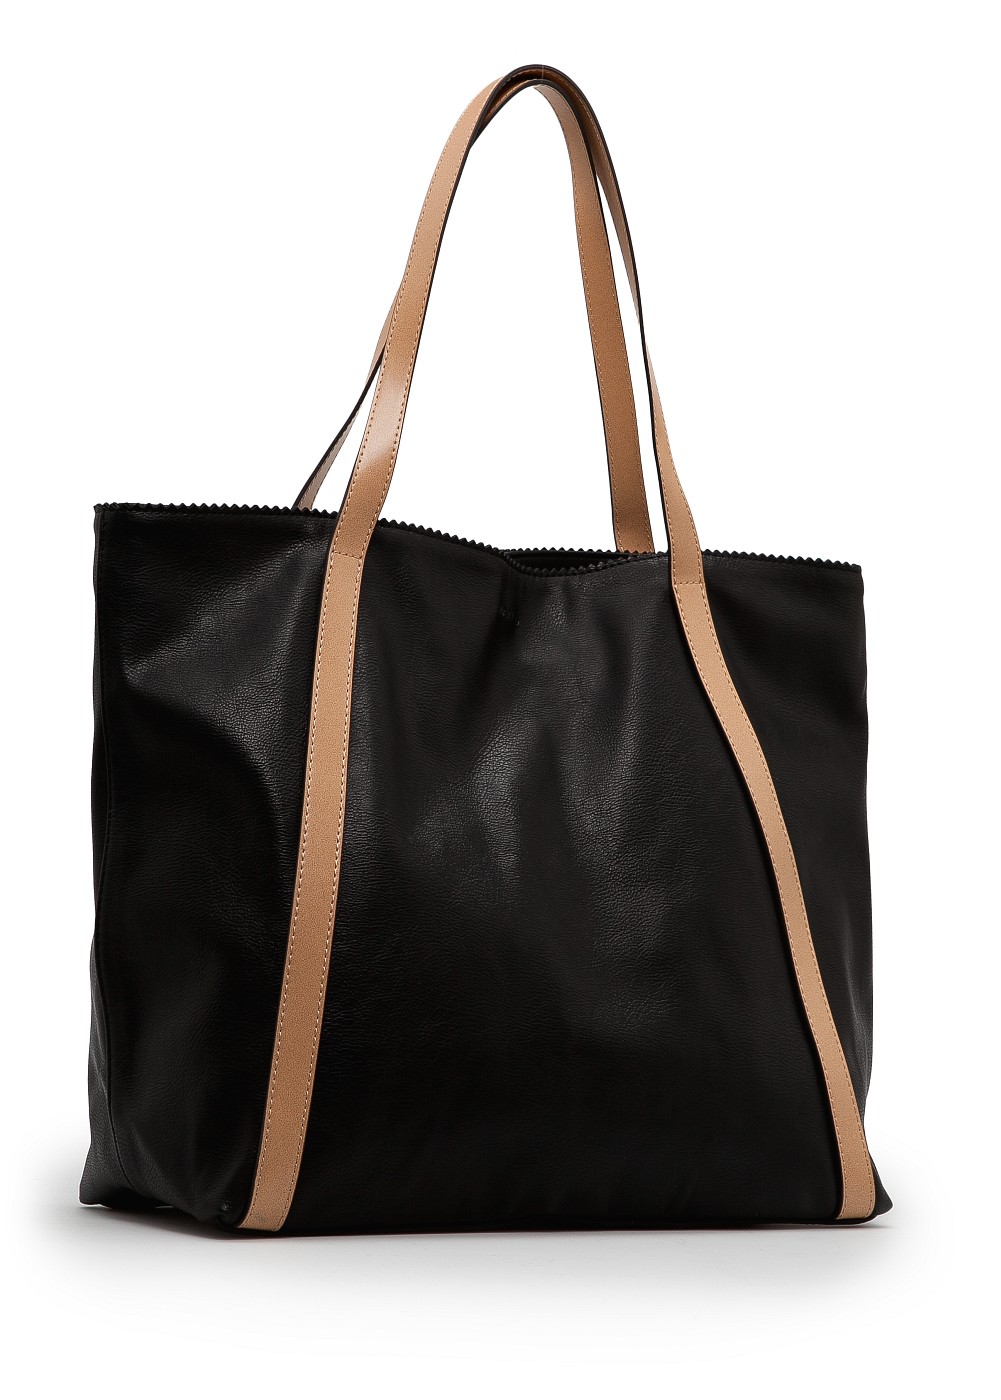 Mango Faux Leather Shopper Bag in 02 (Black) - Lyst